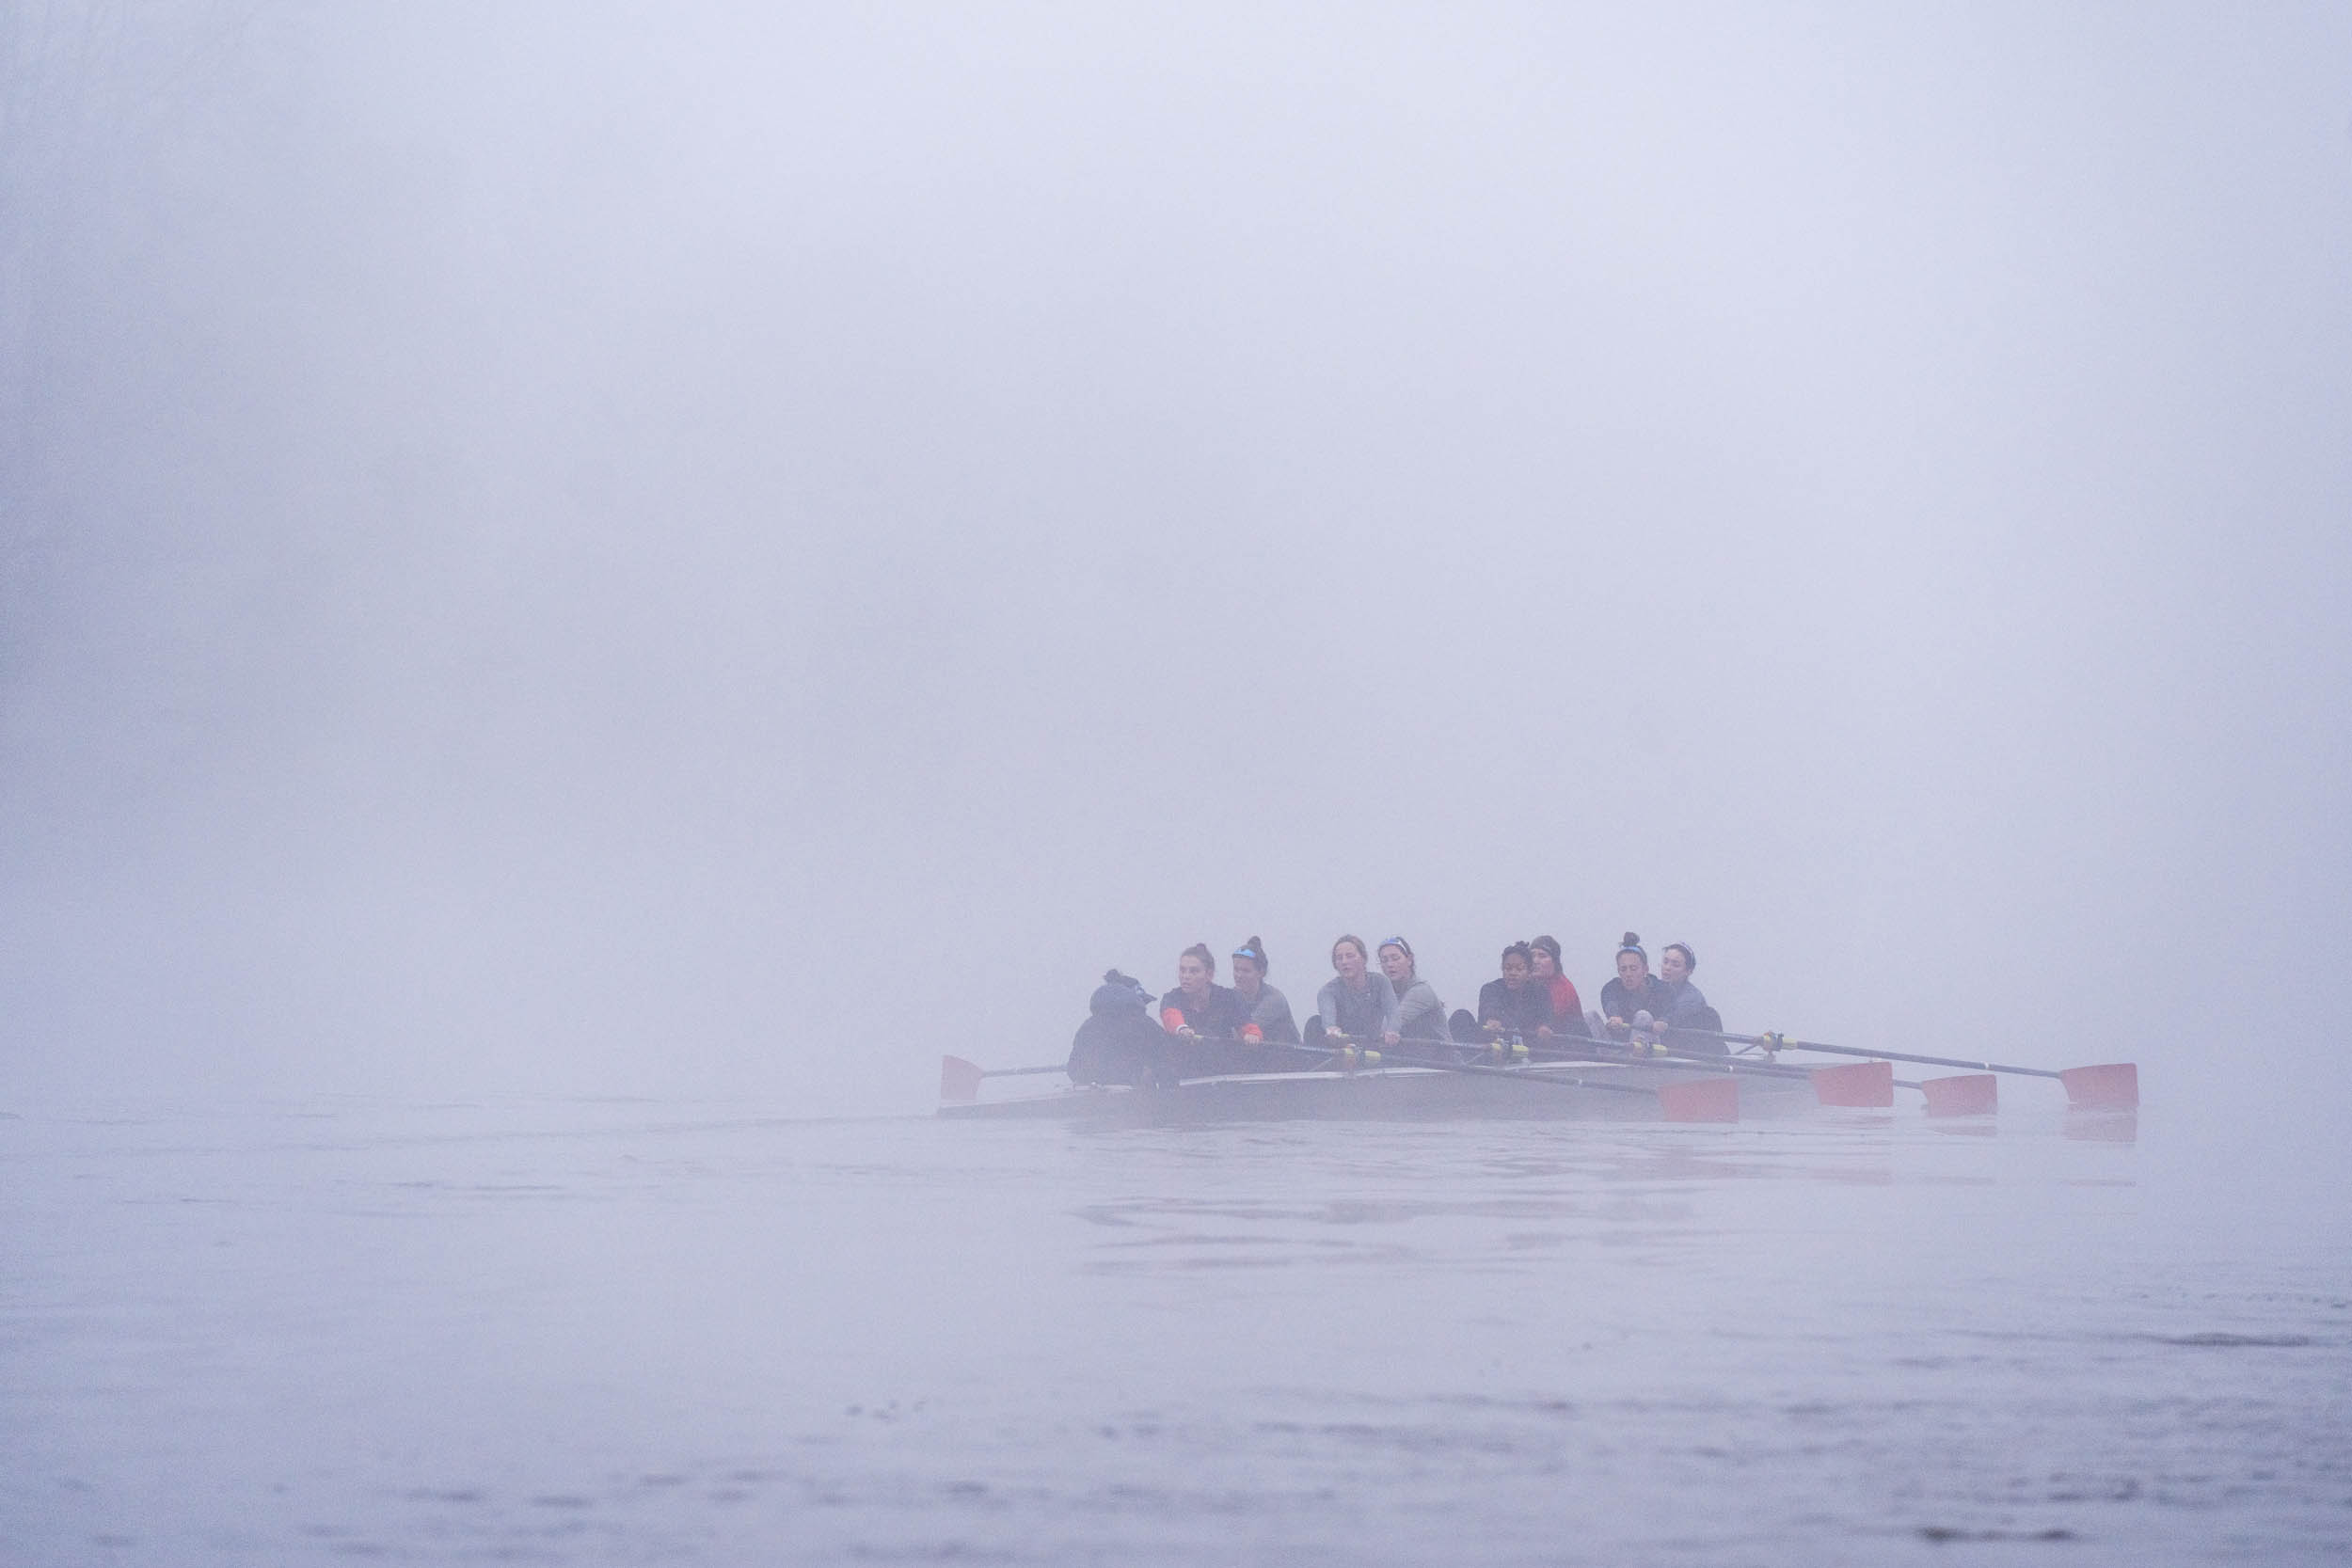 UVA Rowing team on a foggy river